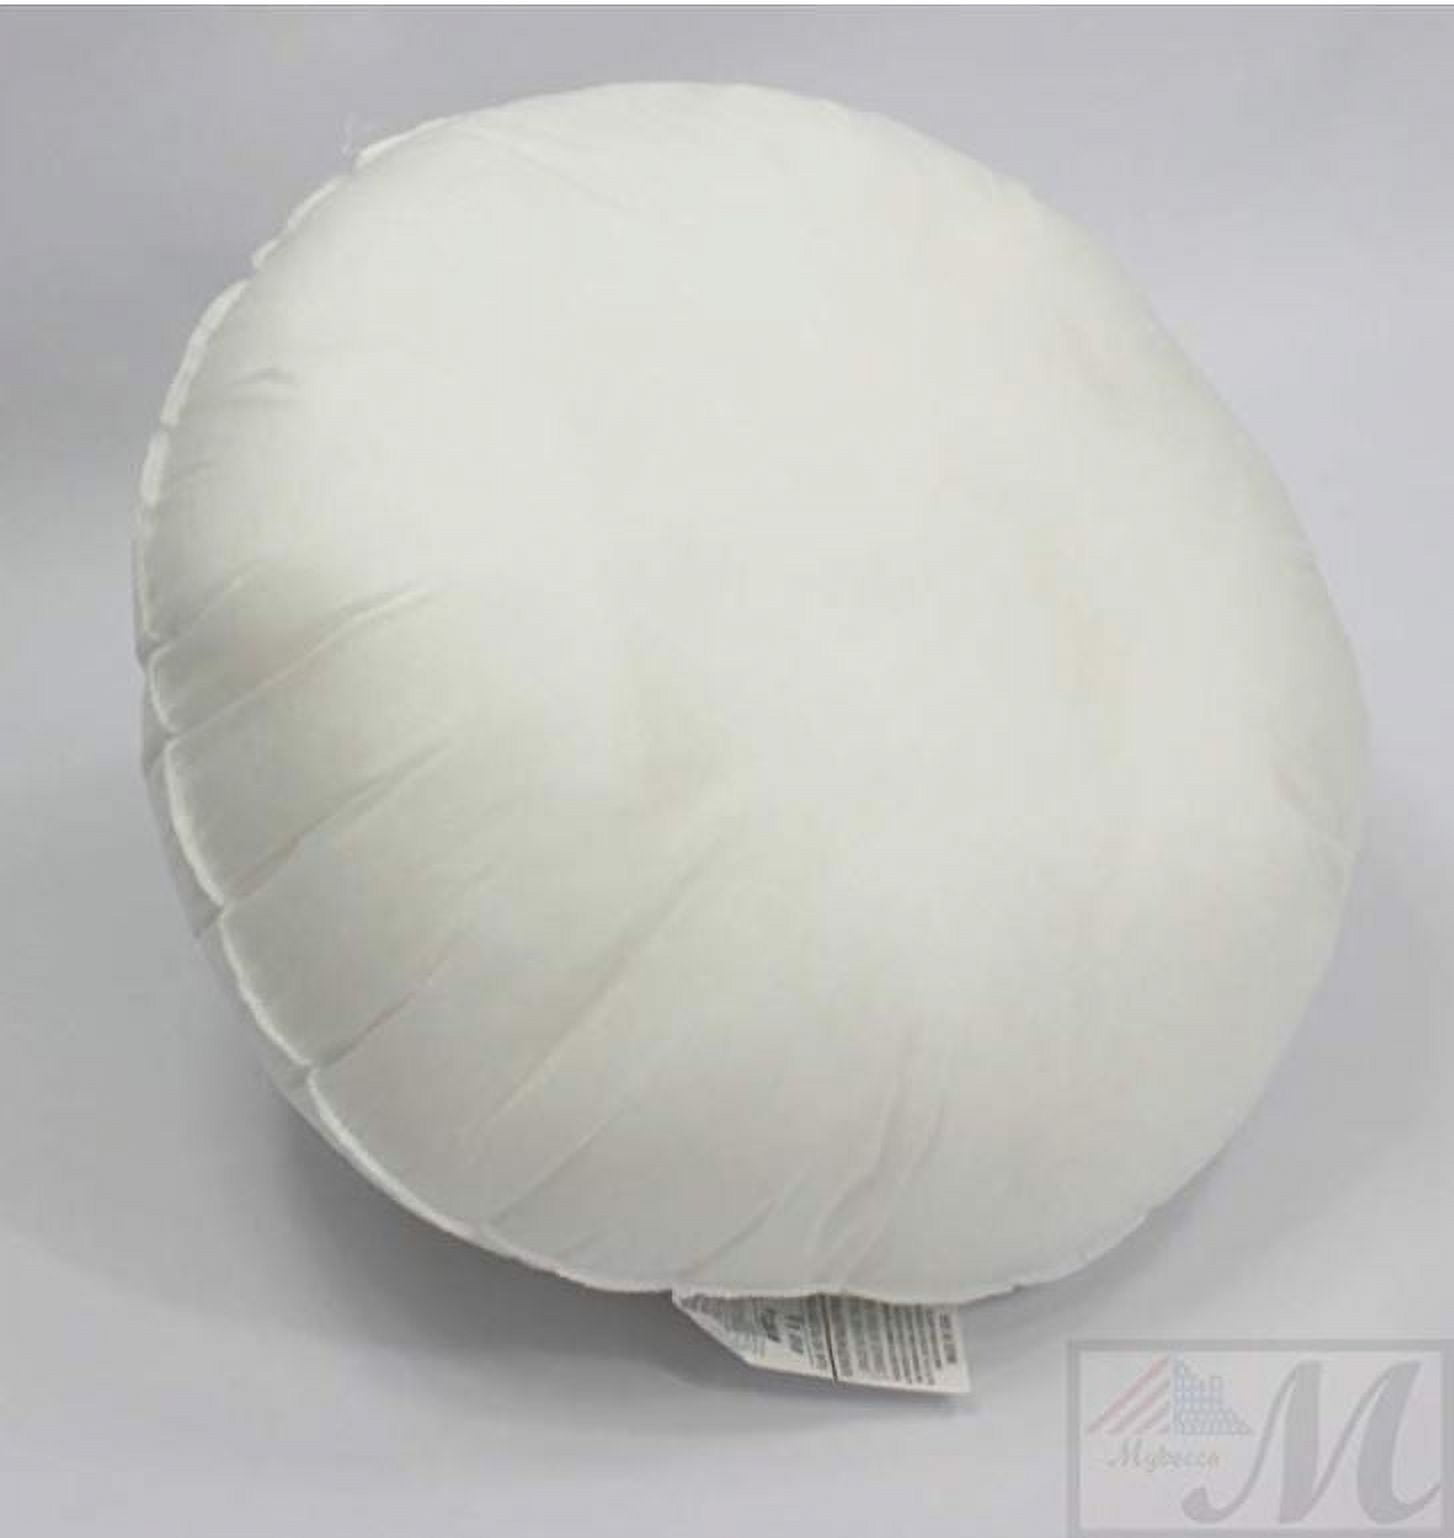 Mybecca Set of 4 - 18 x 18 Premium Hypoallergenic Stuffer Pillow Insert  Sham Square Form Polyester, Standard / White - Made in USA